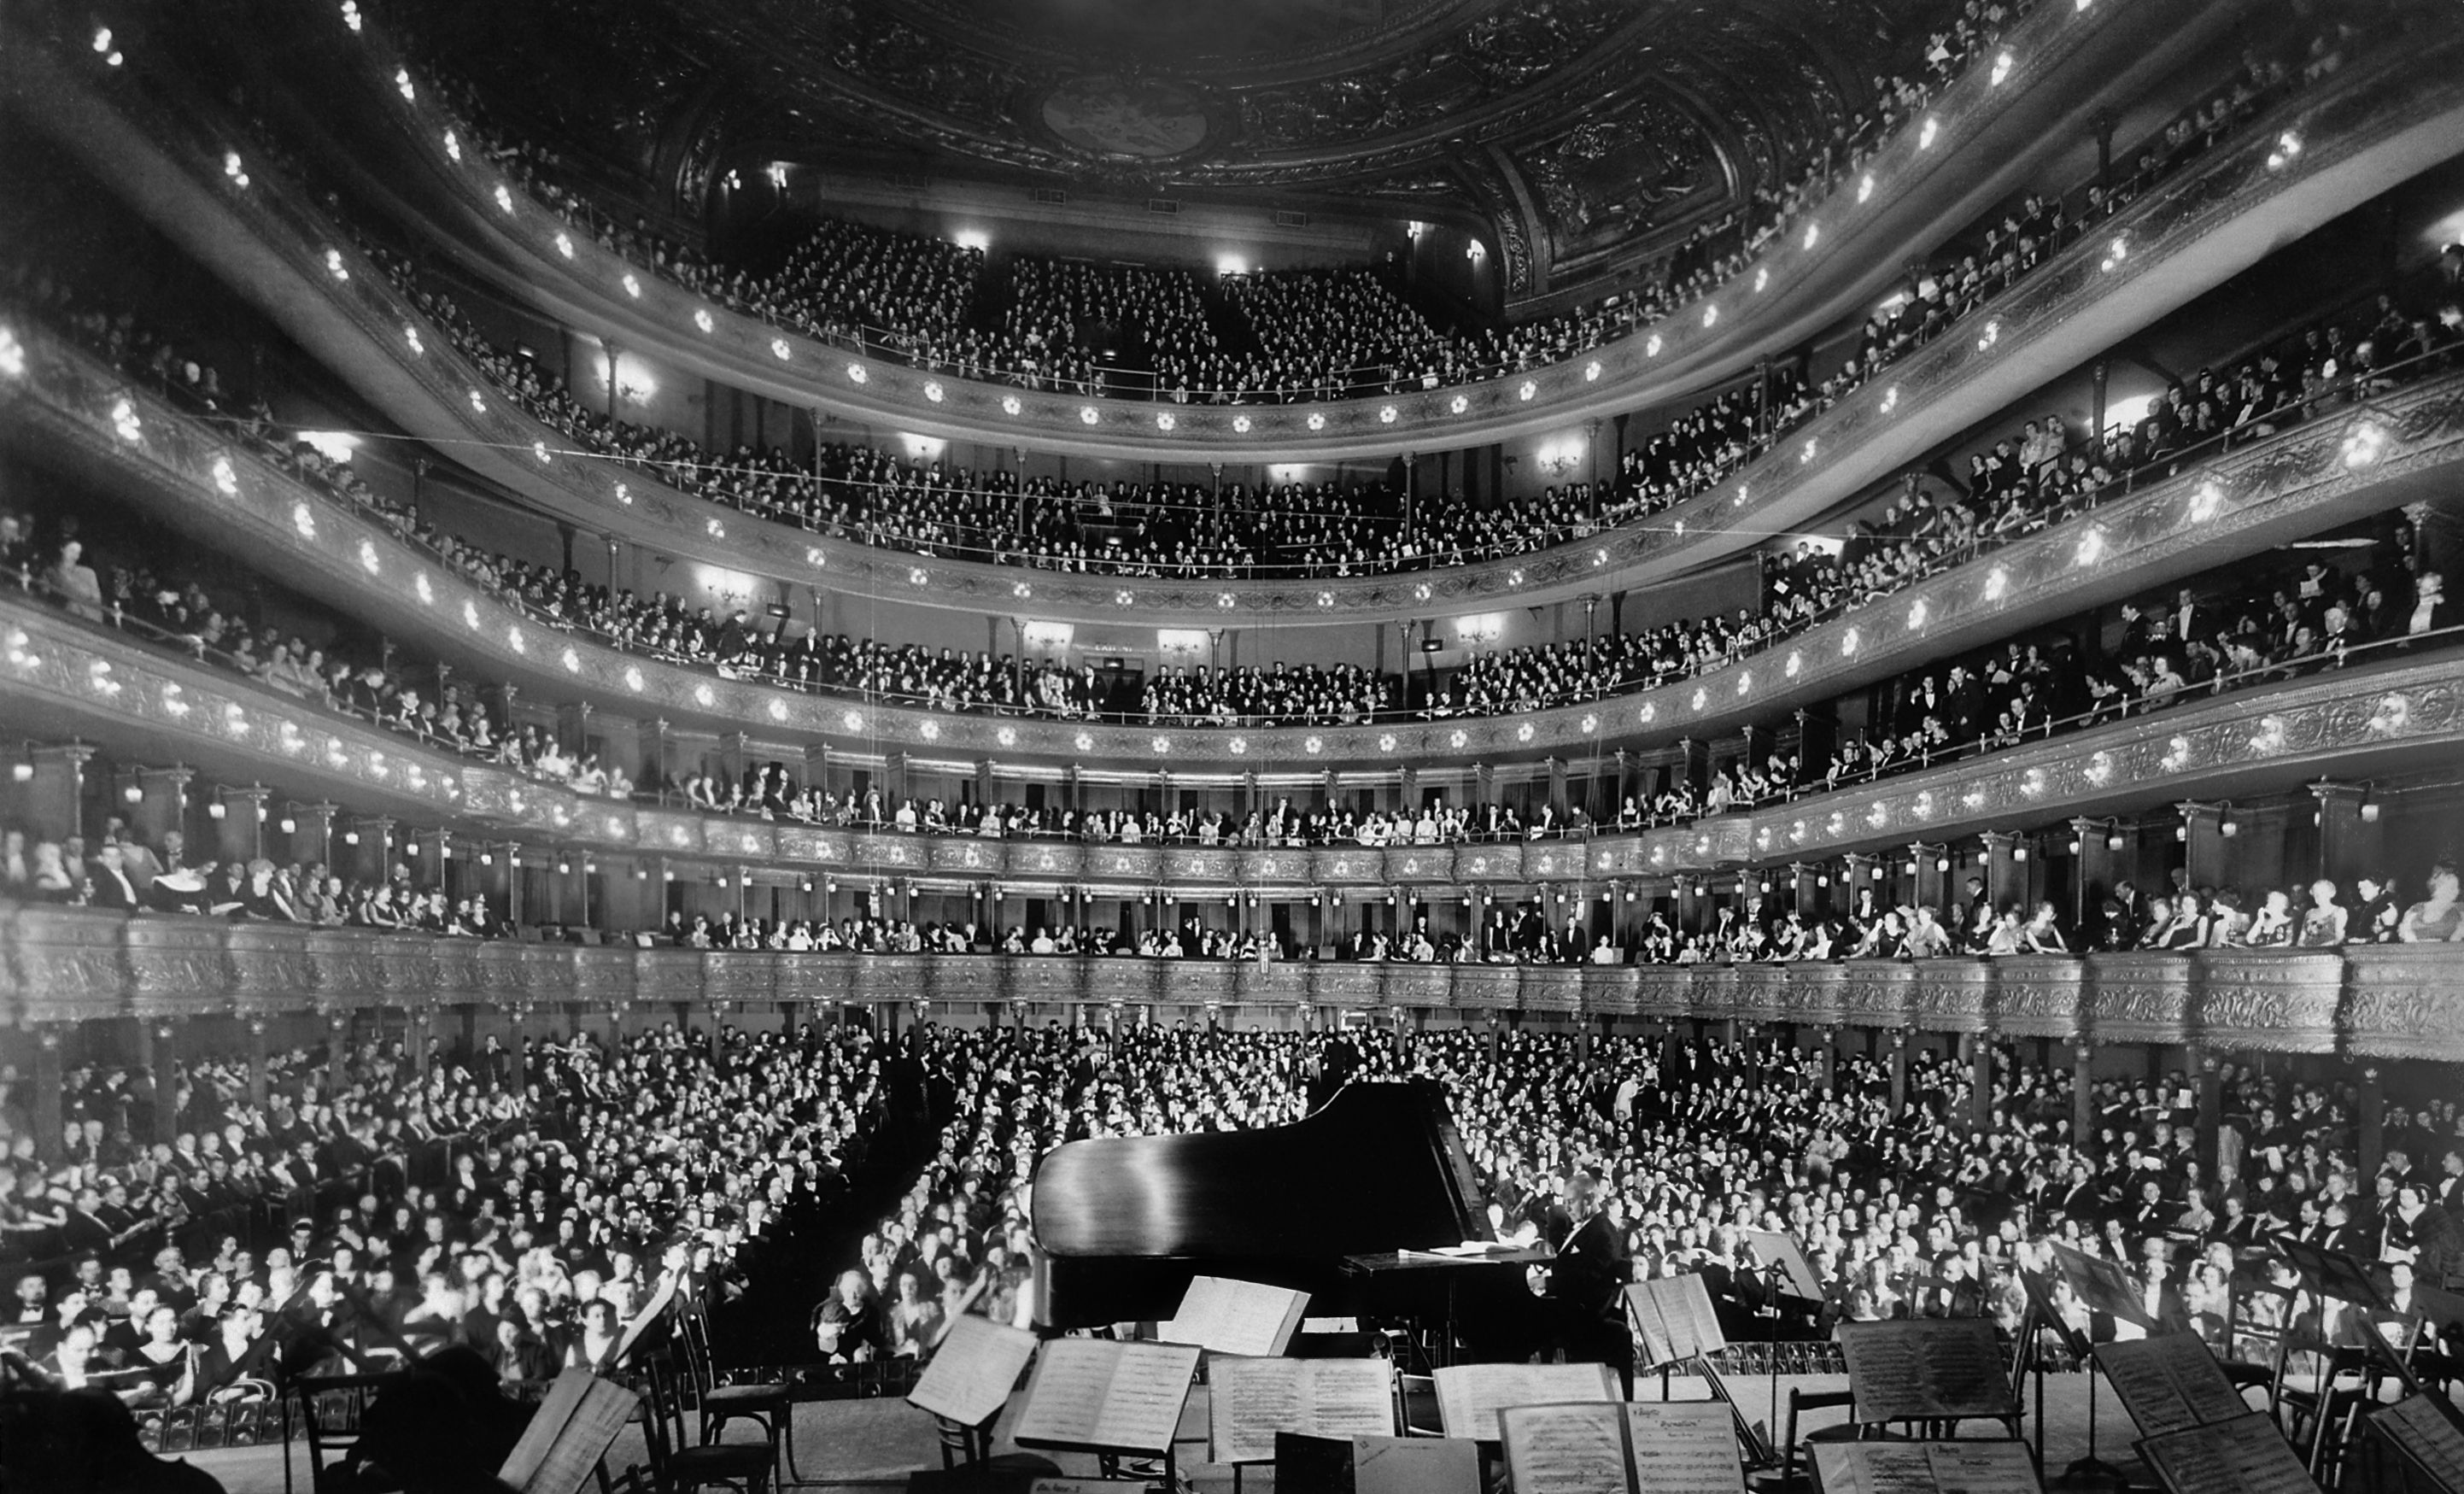 Inside the old New York City Metropolitan Opera House, 1937